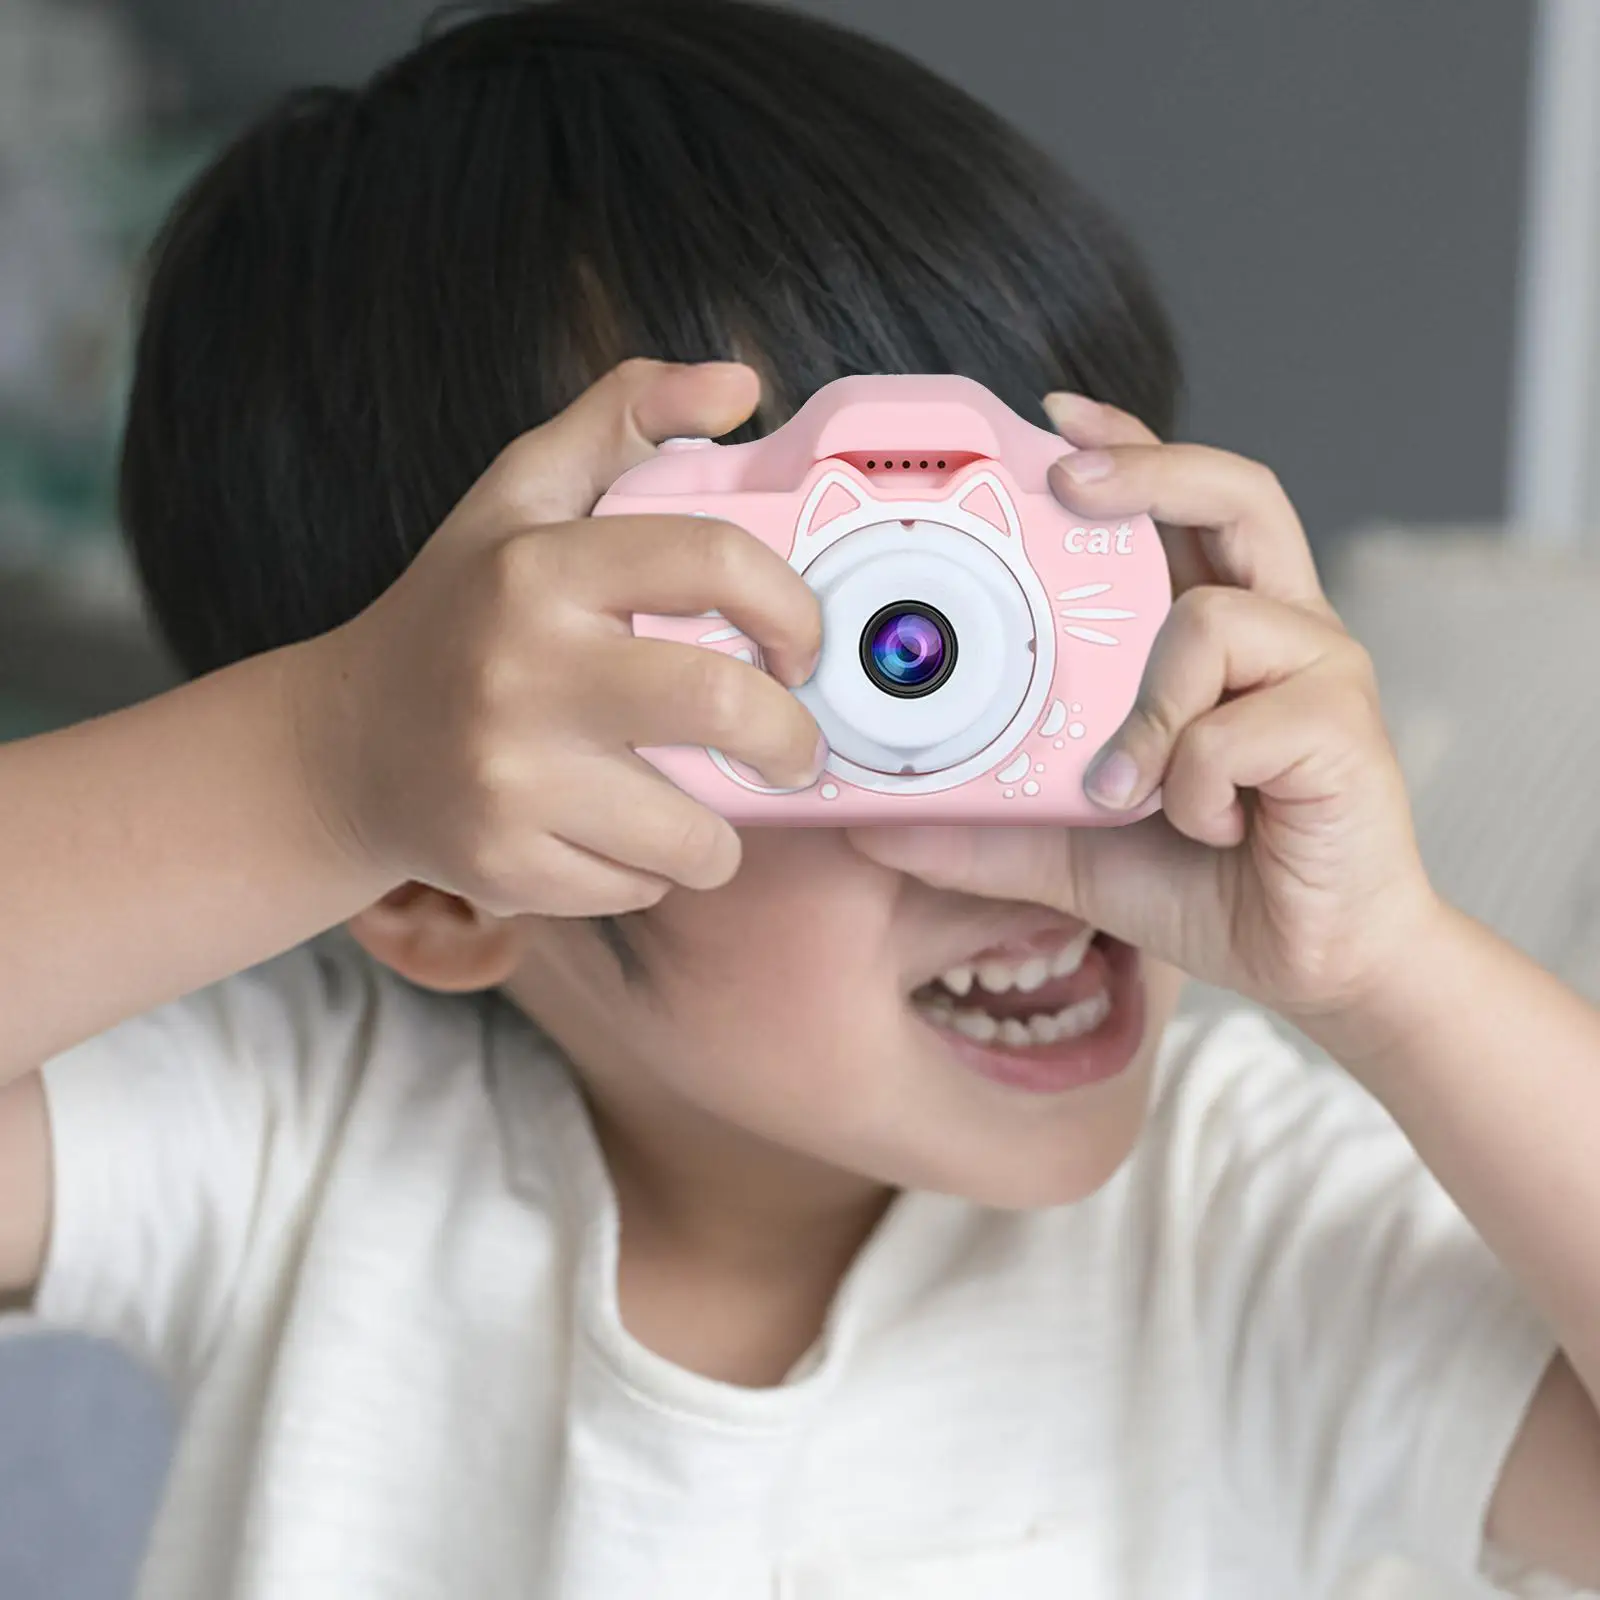 Cute Digital Camera for Kids Video Recording Girls Child Birthday Gift 2000W